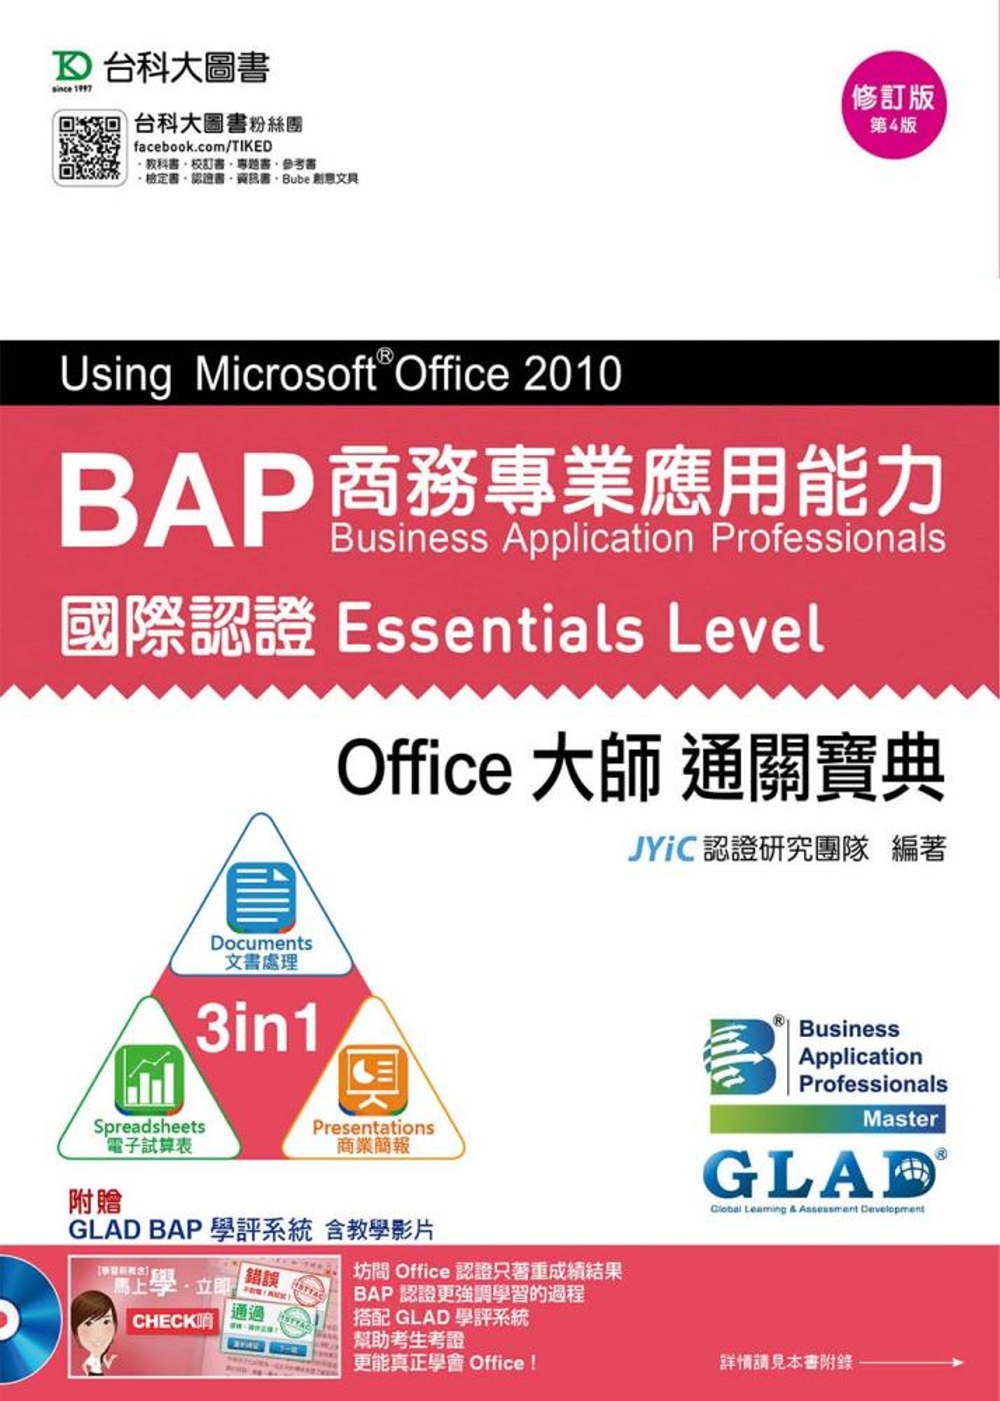 BAP Using Microsoft® Office 2010商務專業應用能力國際認證Essentials Level Office大師通關寶典(三合一)：Documents文書處理、Spreadsheets電子試算表、Presentations商業簡報) - 修訂版(第四版) - 附贈BAP學評系統含教學影片